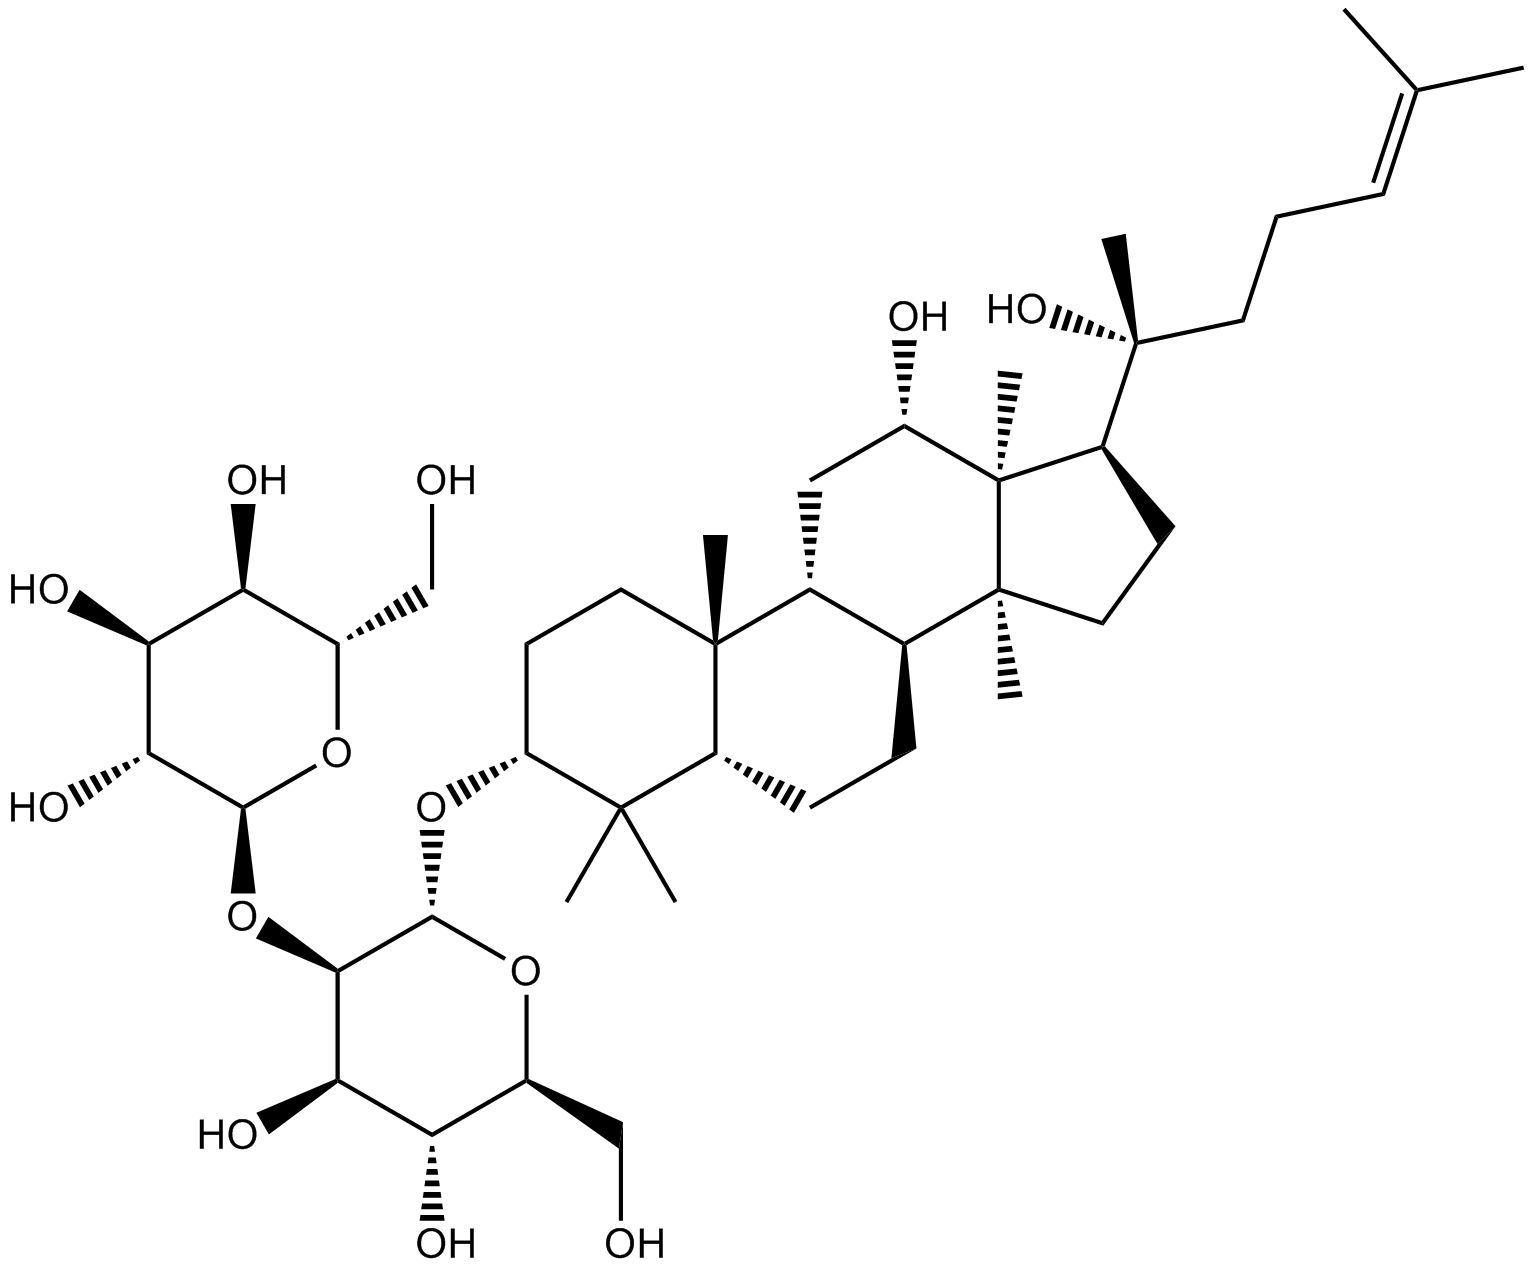 20(R)Ginsenoside Rg3